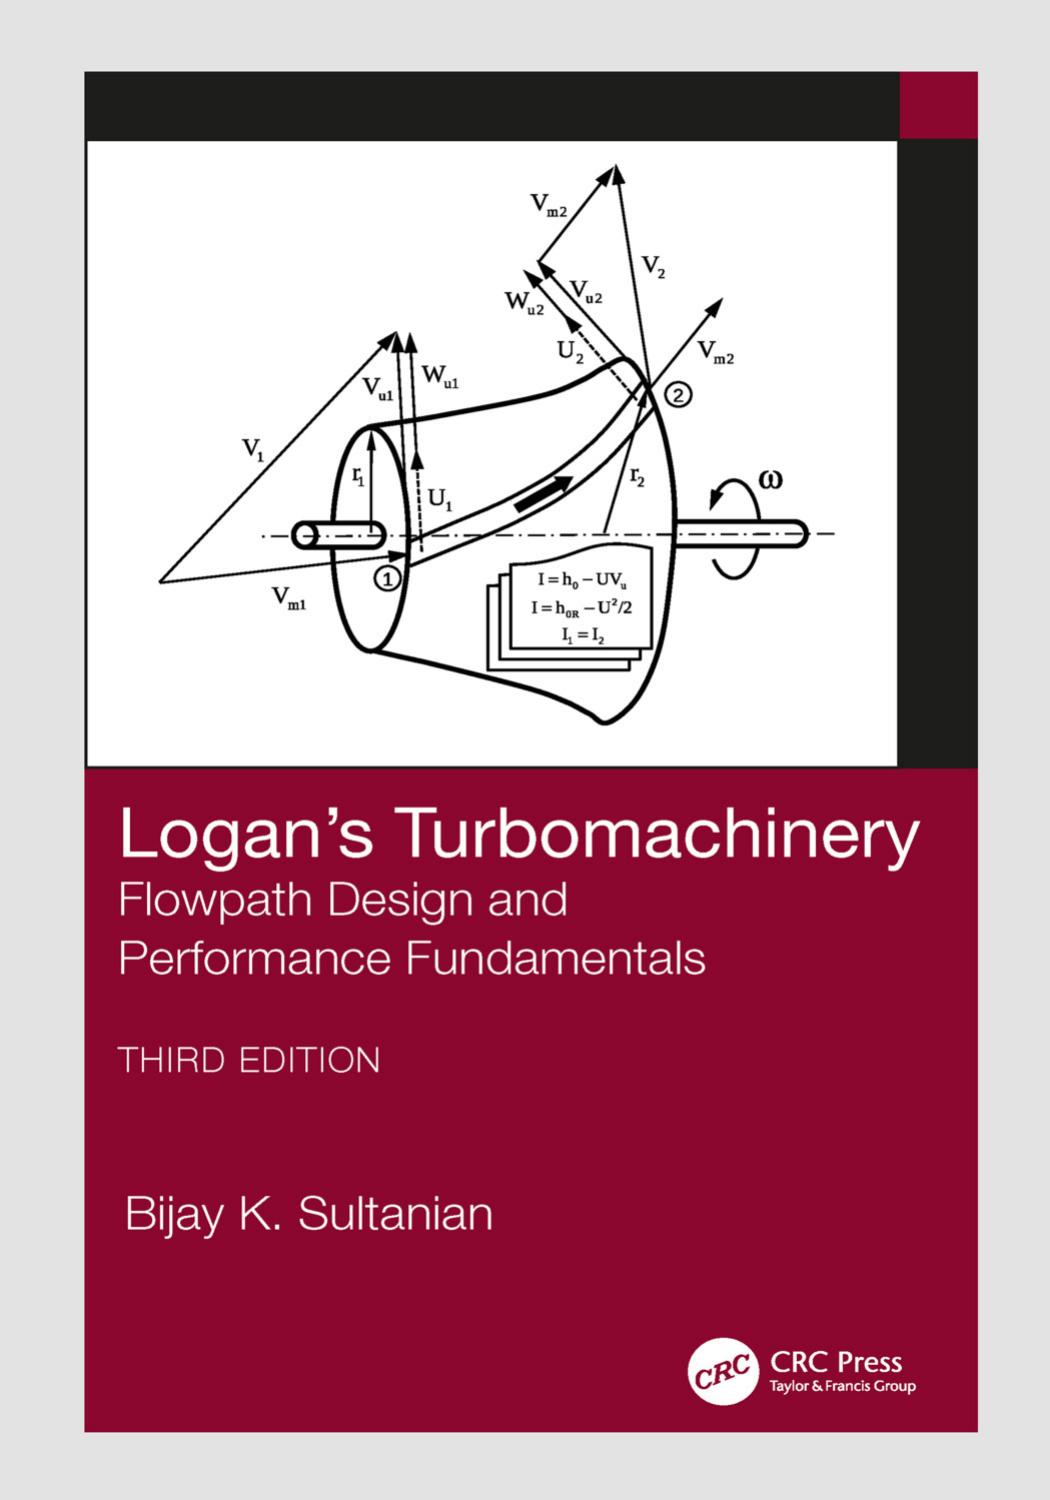 Logan’s Turbomachinery: Flowpath Design and Performance Fundamentals